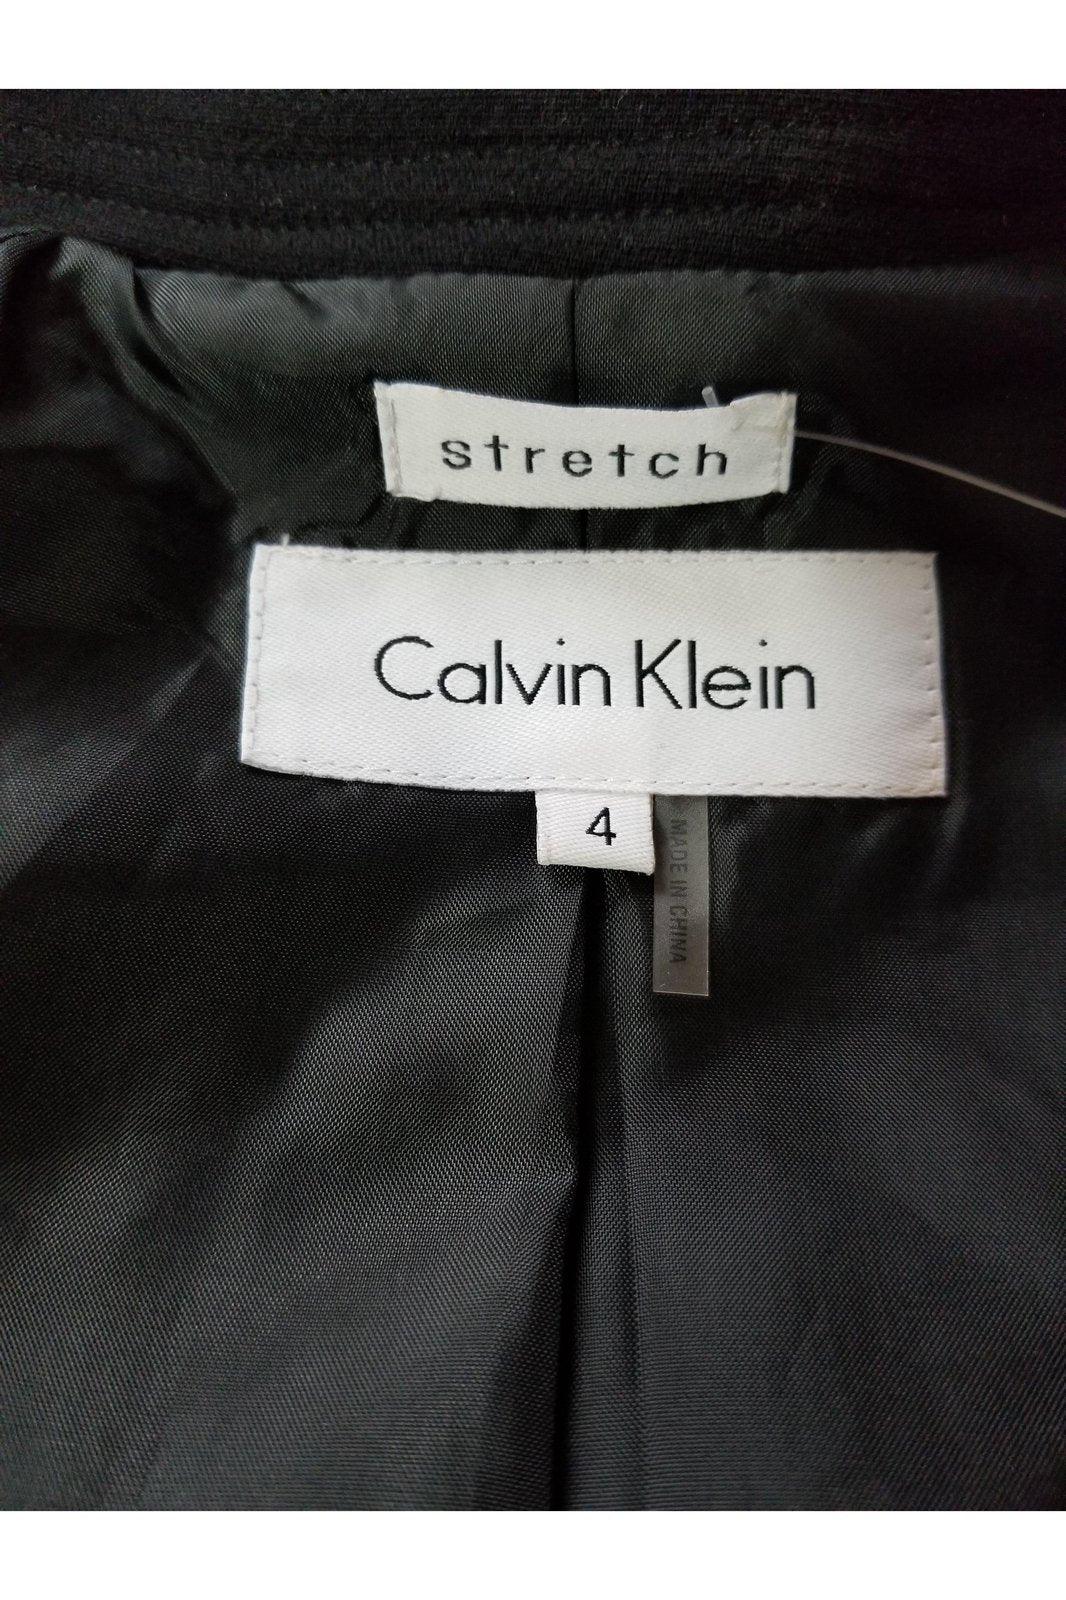 Calvin Klein stretch, black, jacket blazer sz 4